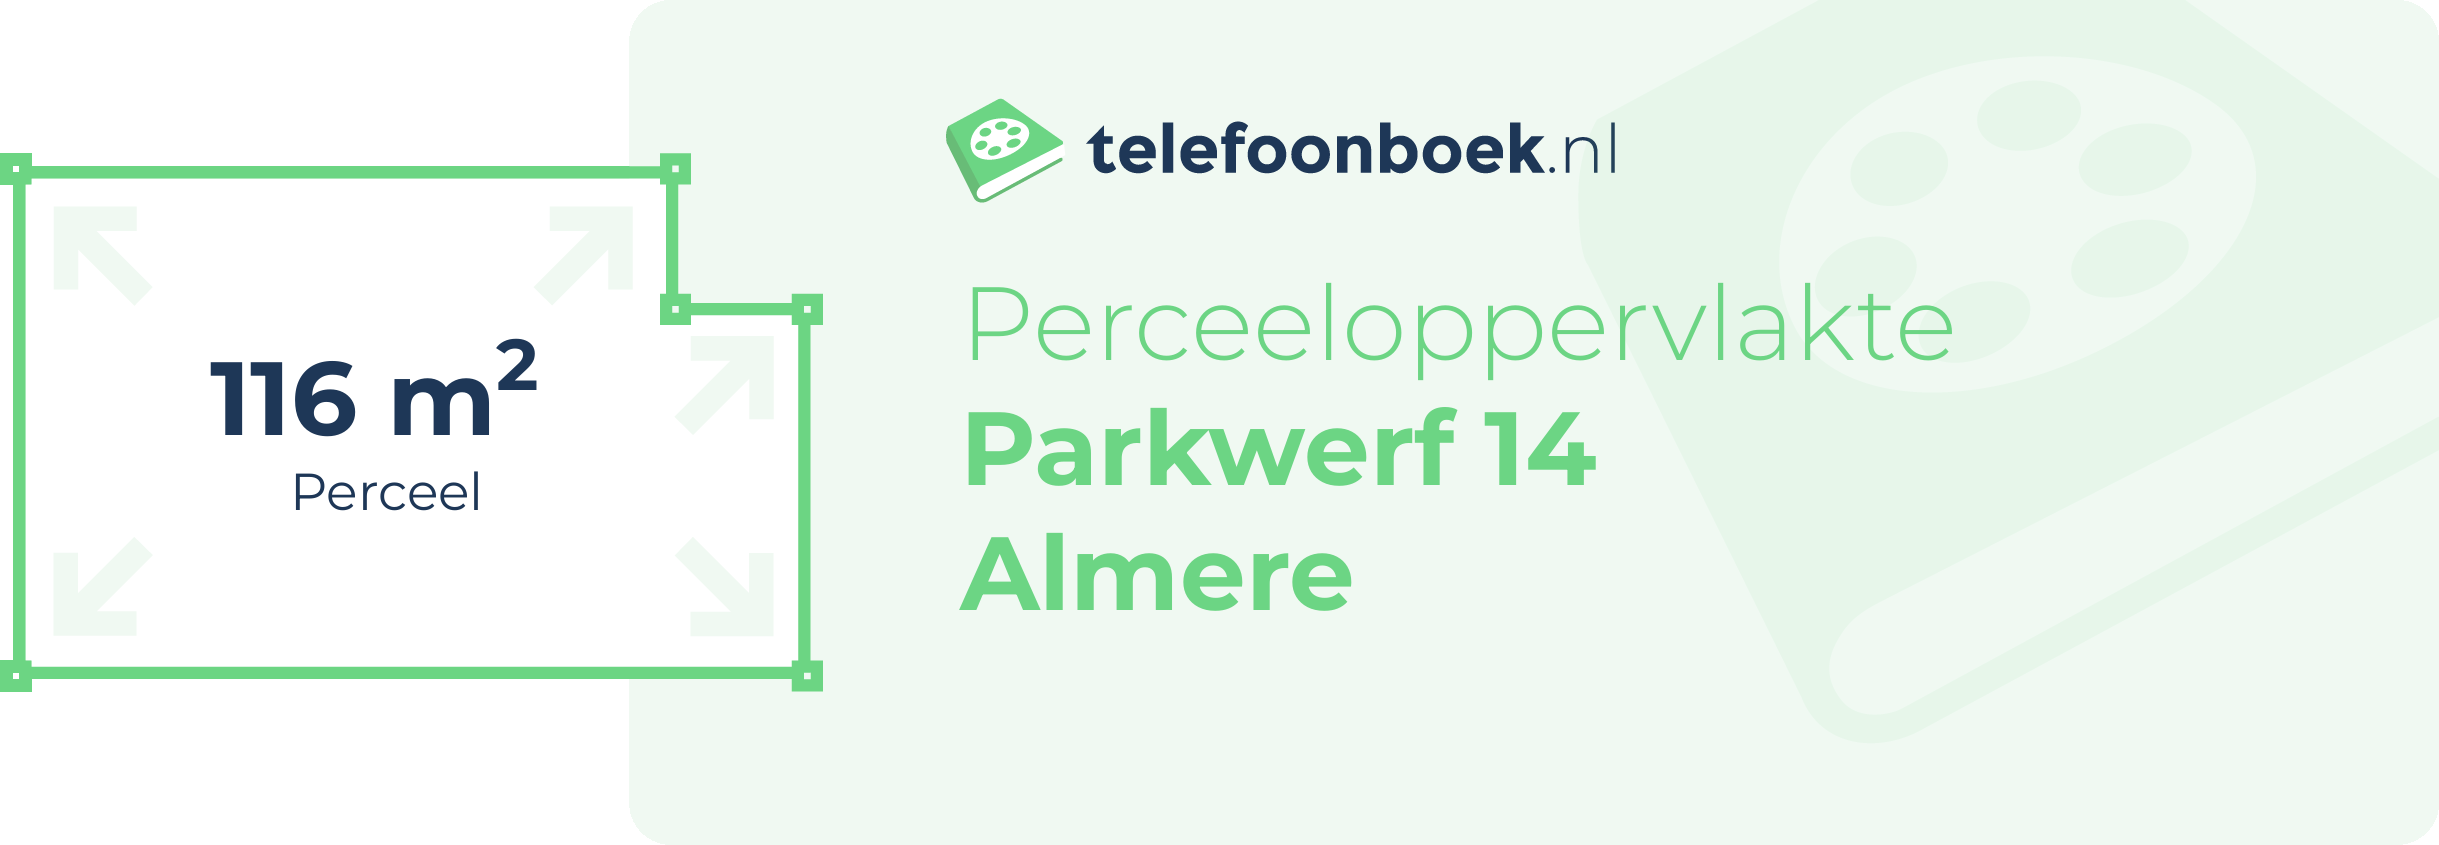 Perceeloppervlakte Parkwerf 14 Almere